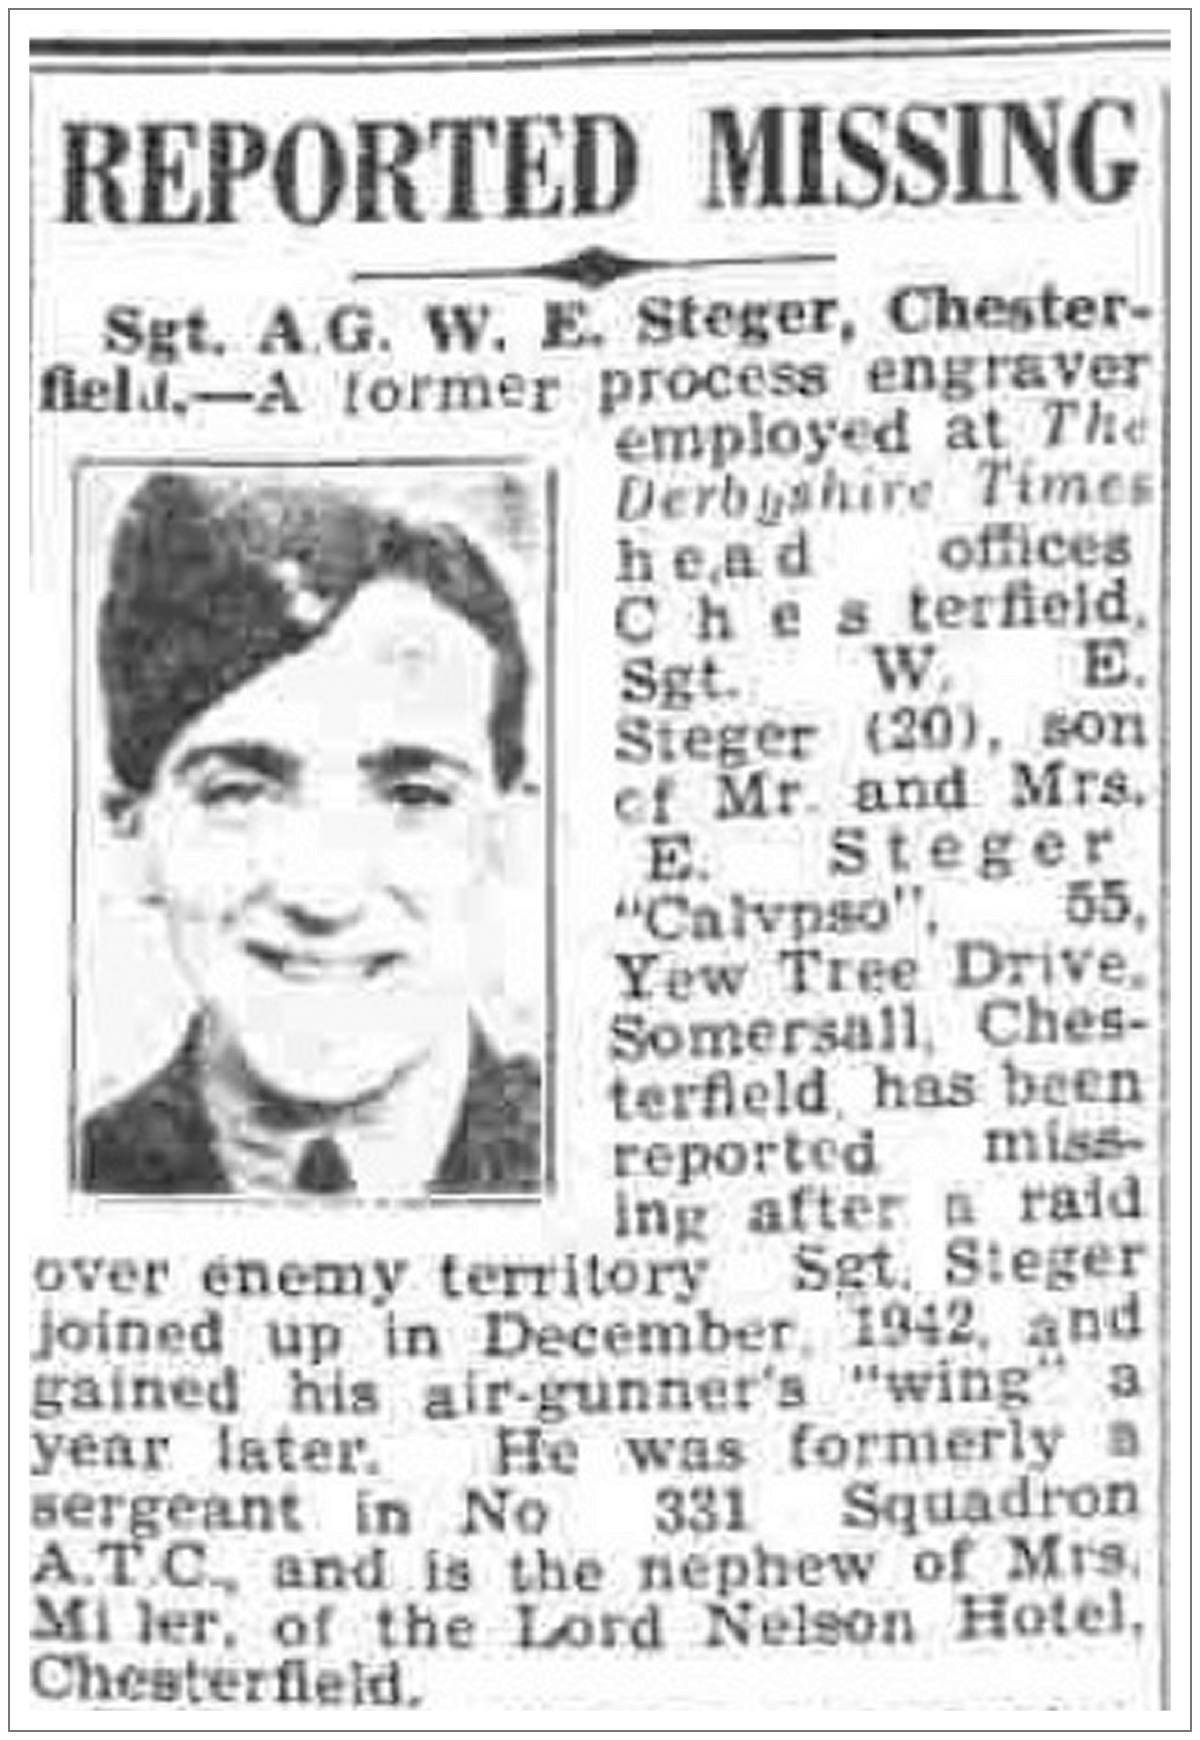 Sergeant William Edward Steger, Chesterfield, UK